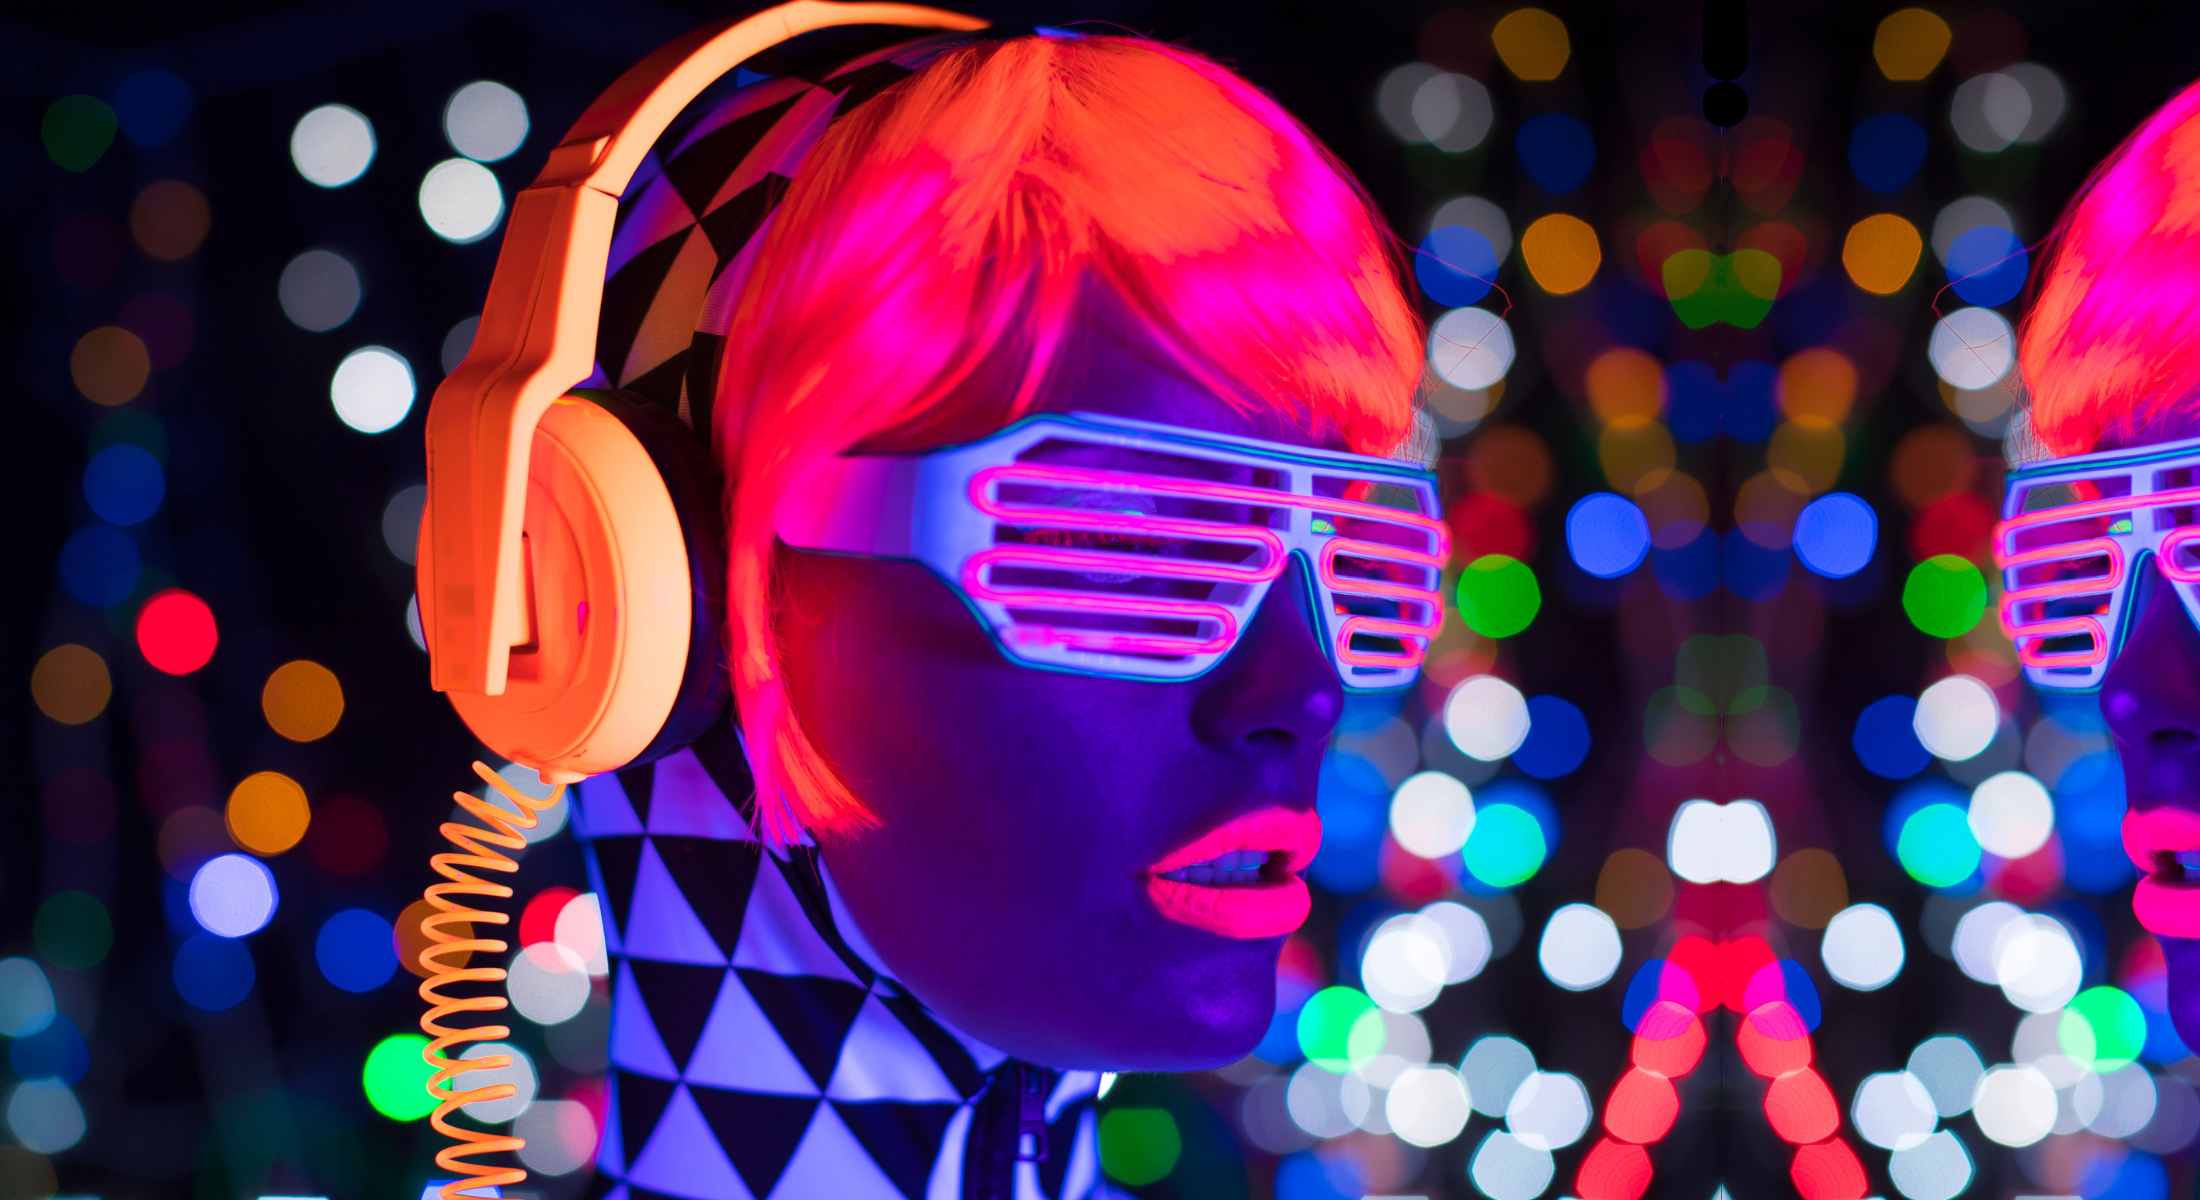 DJ Model wearing cyber sunglasses, neon headphones, neon lipstick, neon hair